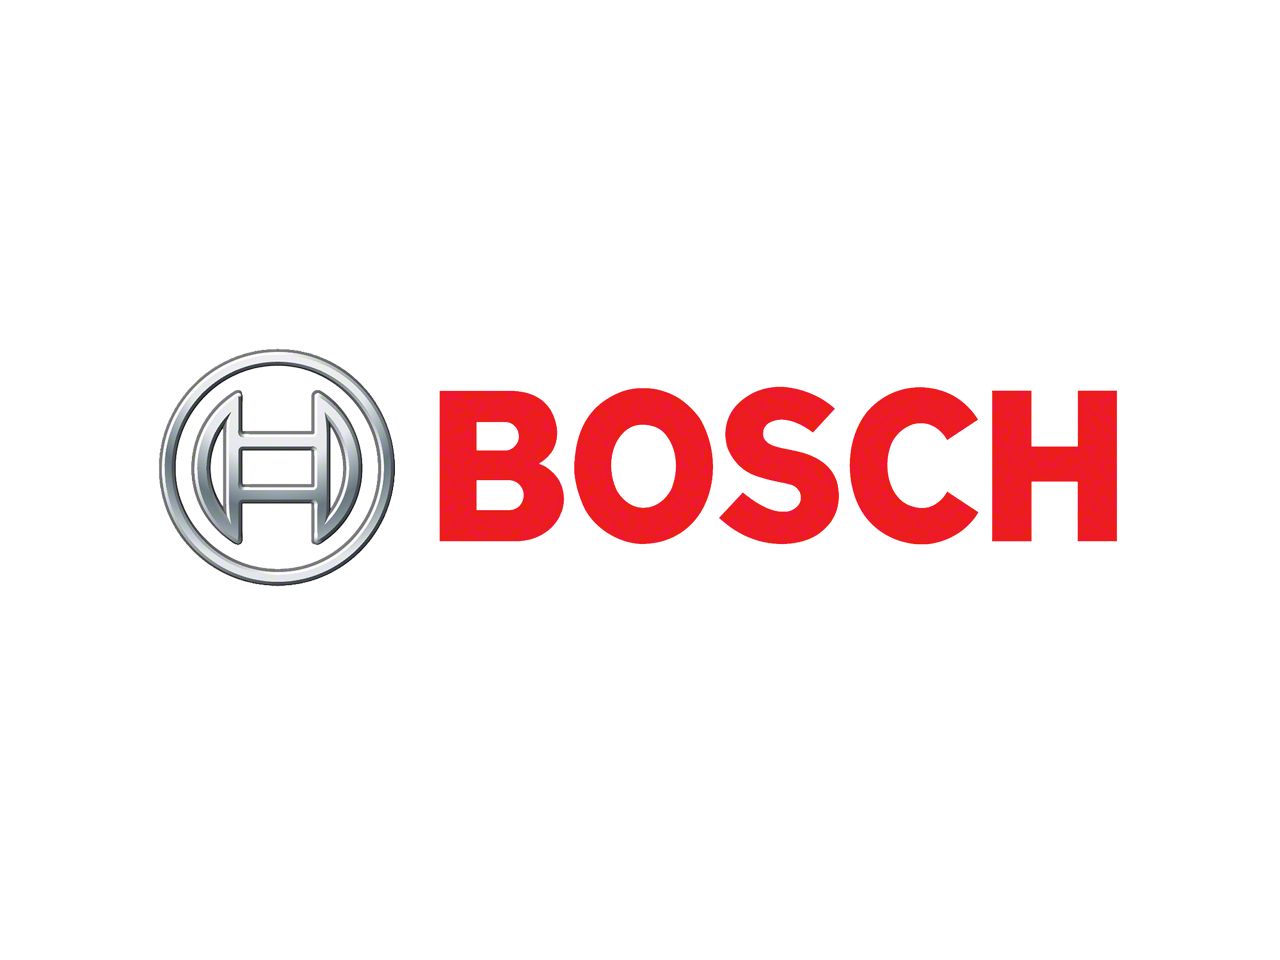 Bosch Parts